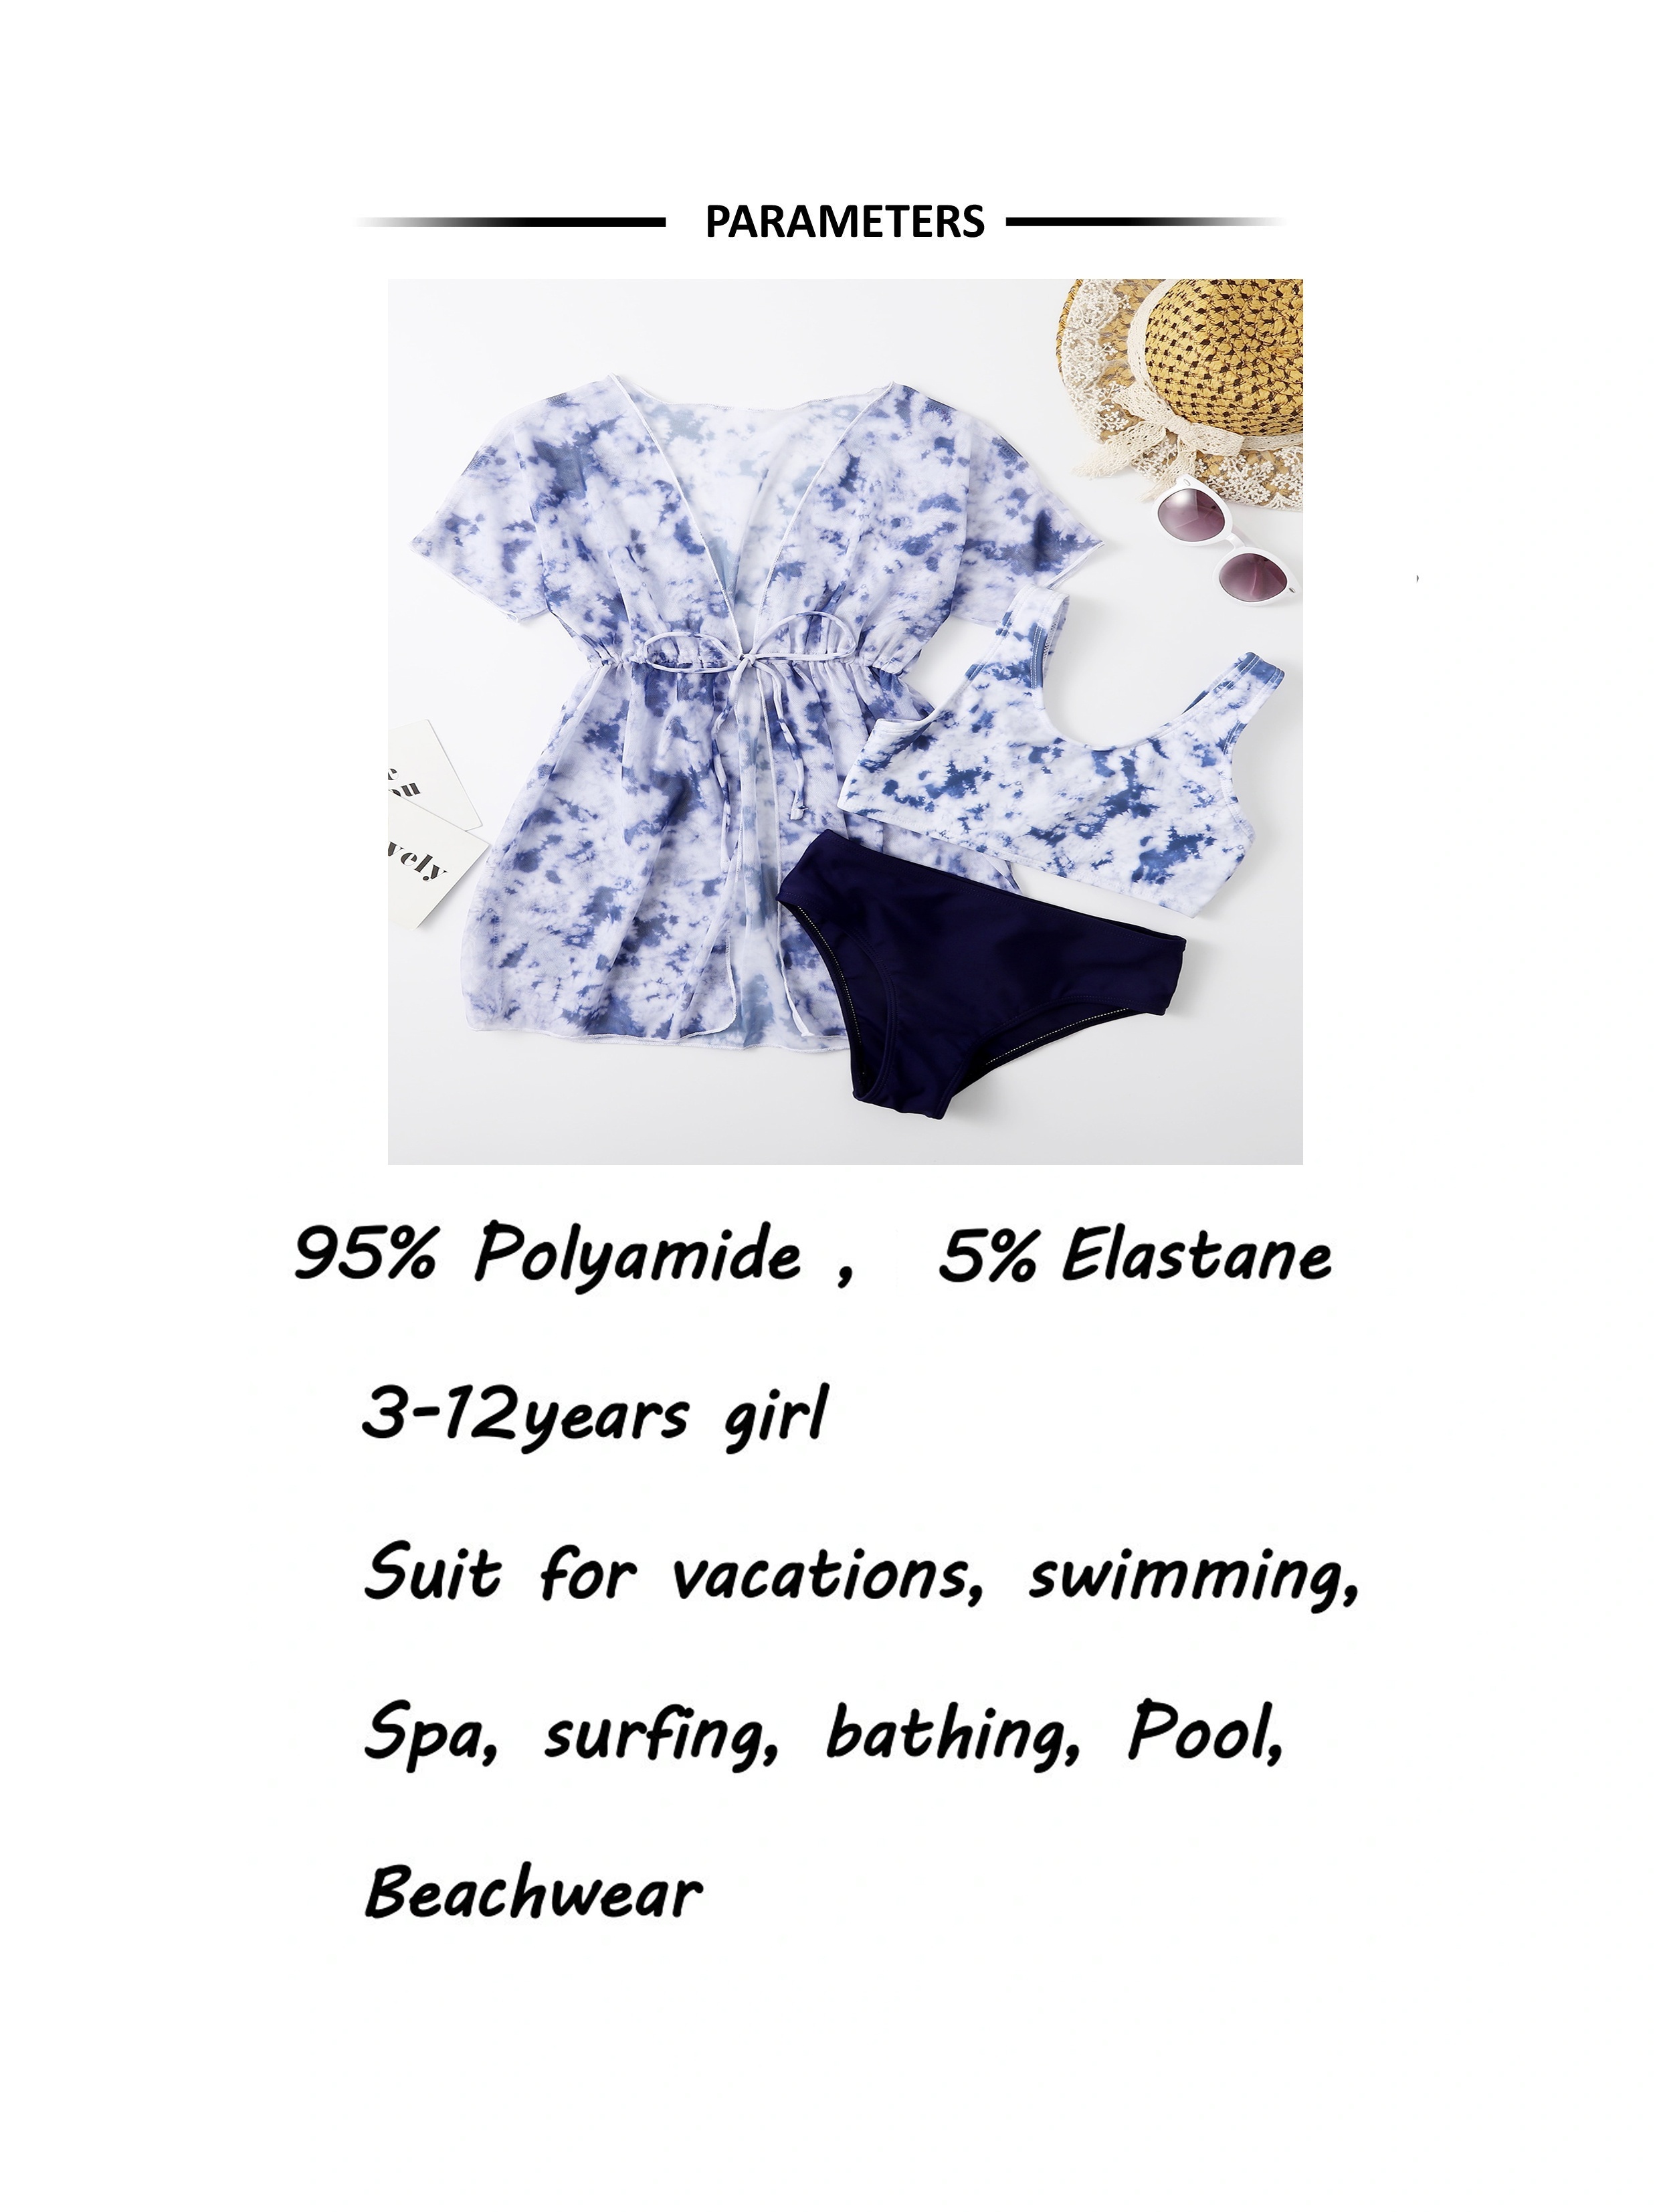 Tie-Dye Short-Sleeve Tankini Swim Set for Girls